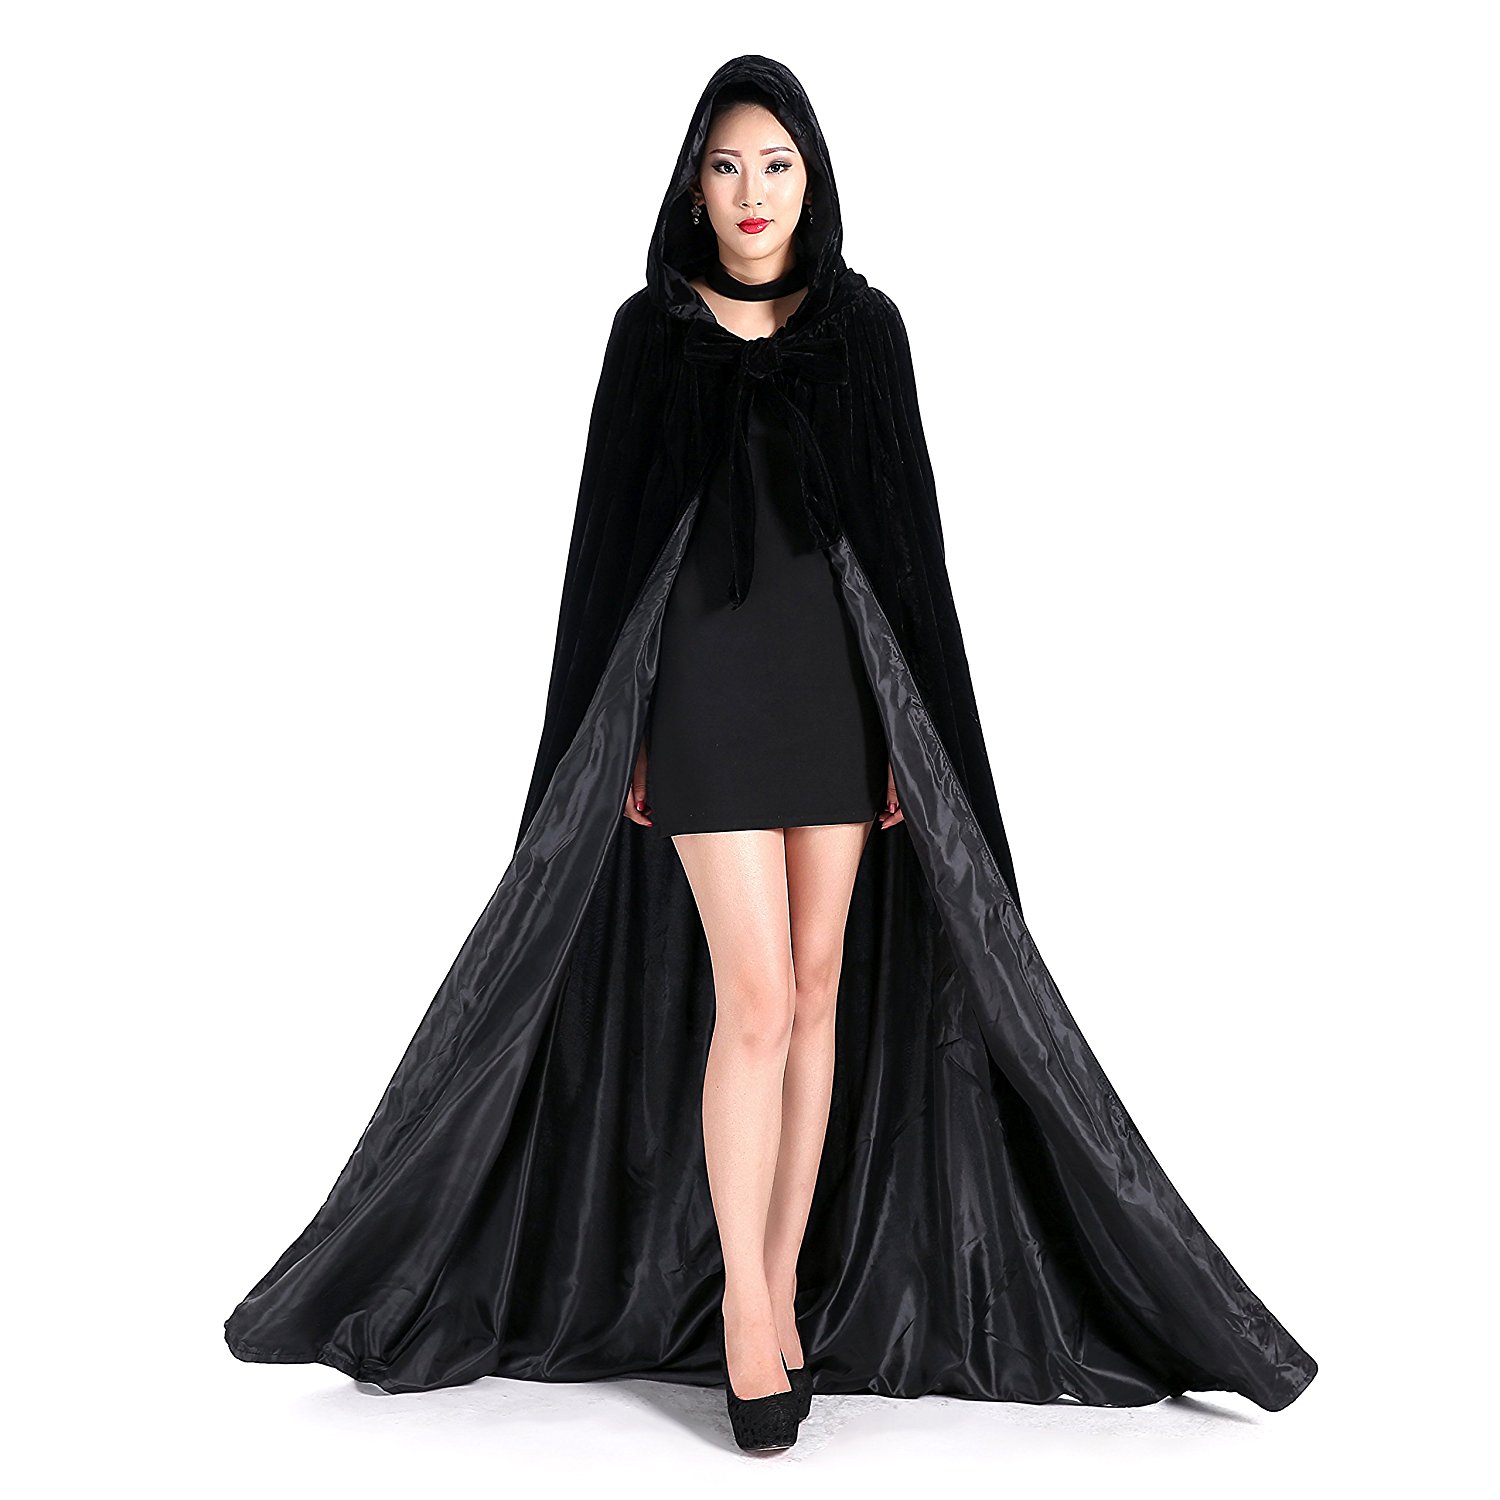 Newdeve Halloween Hooded Cloak Medieval Wedding Cape Black Robe ...